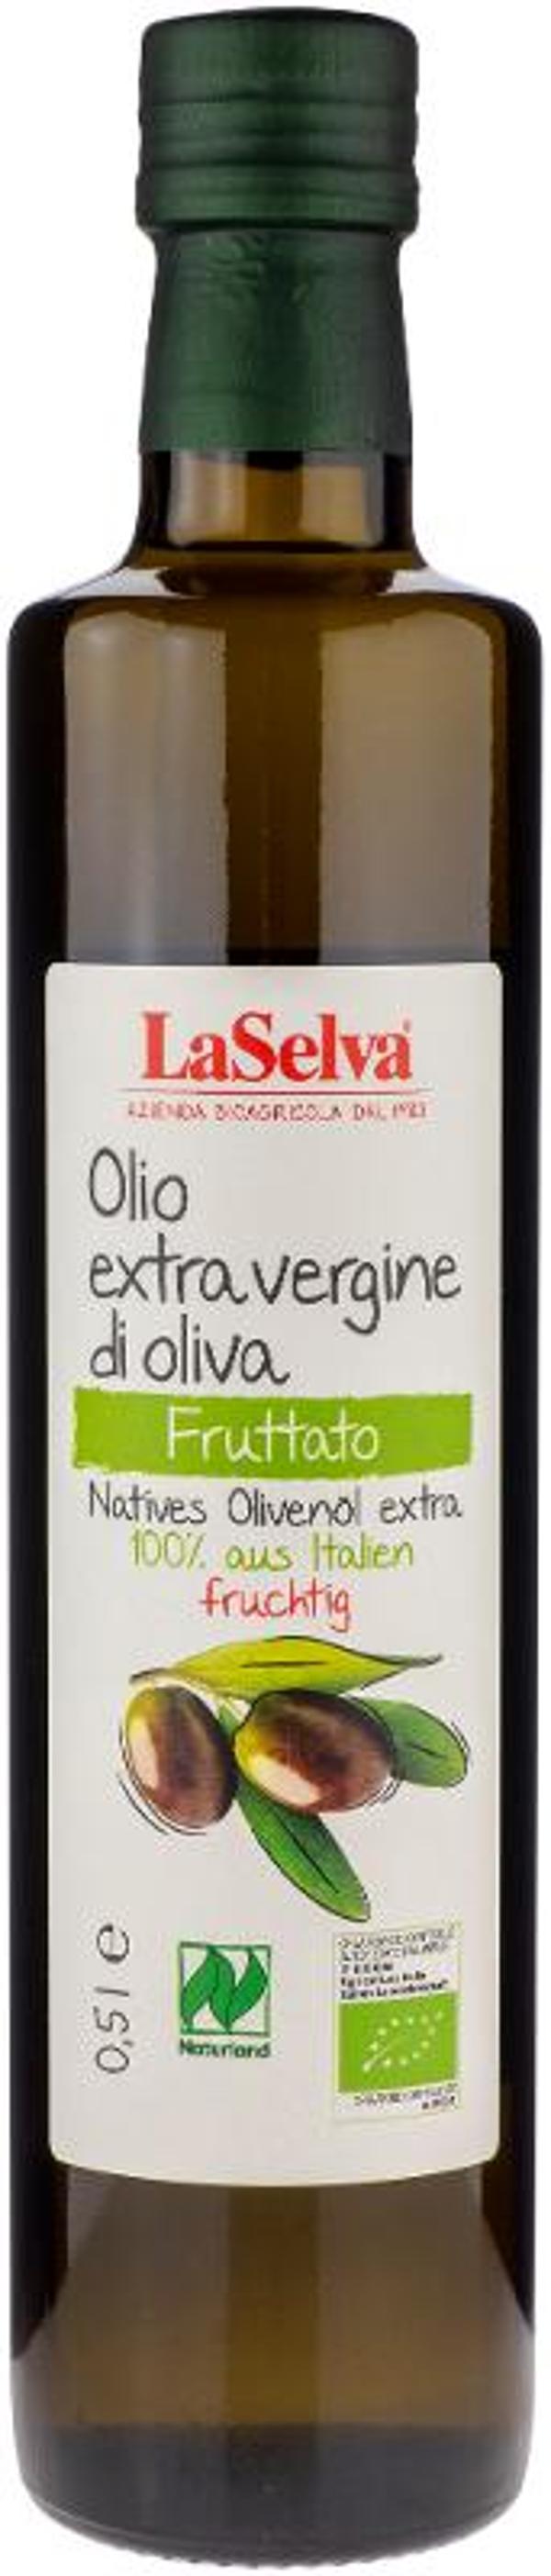 Produktfoto zu Natives Olivenöl extra fruchtig 0,5l LaSelva